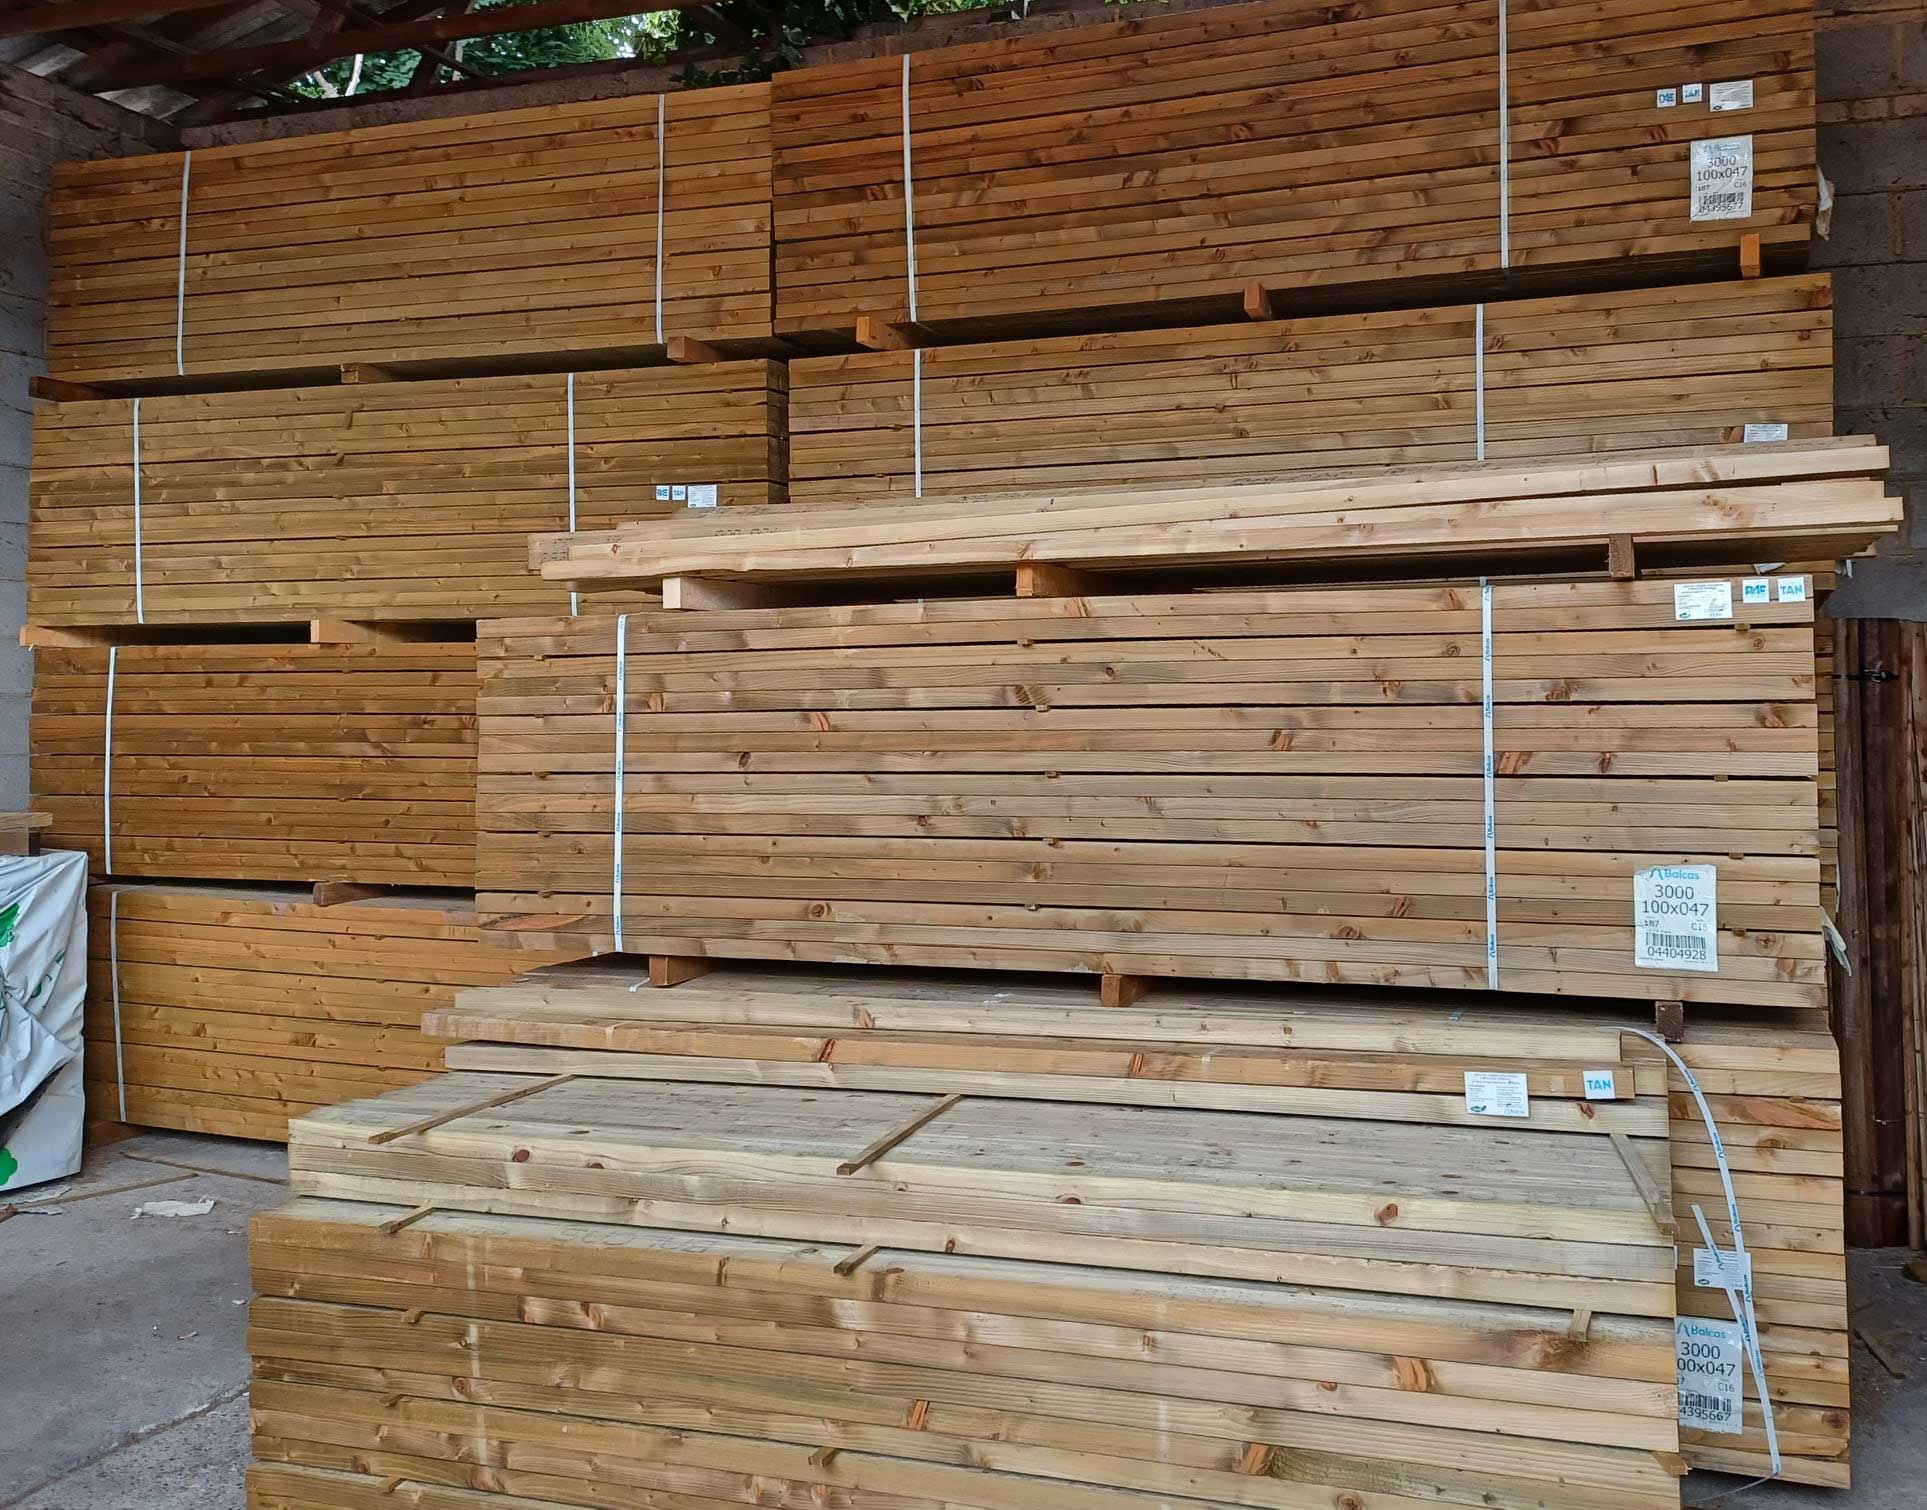 timber supplies